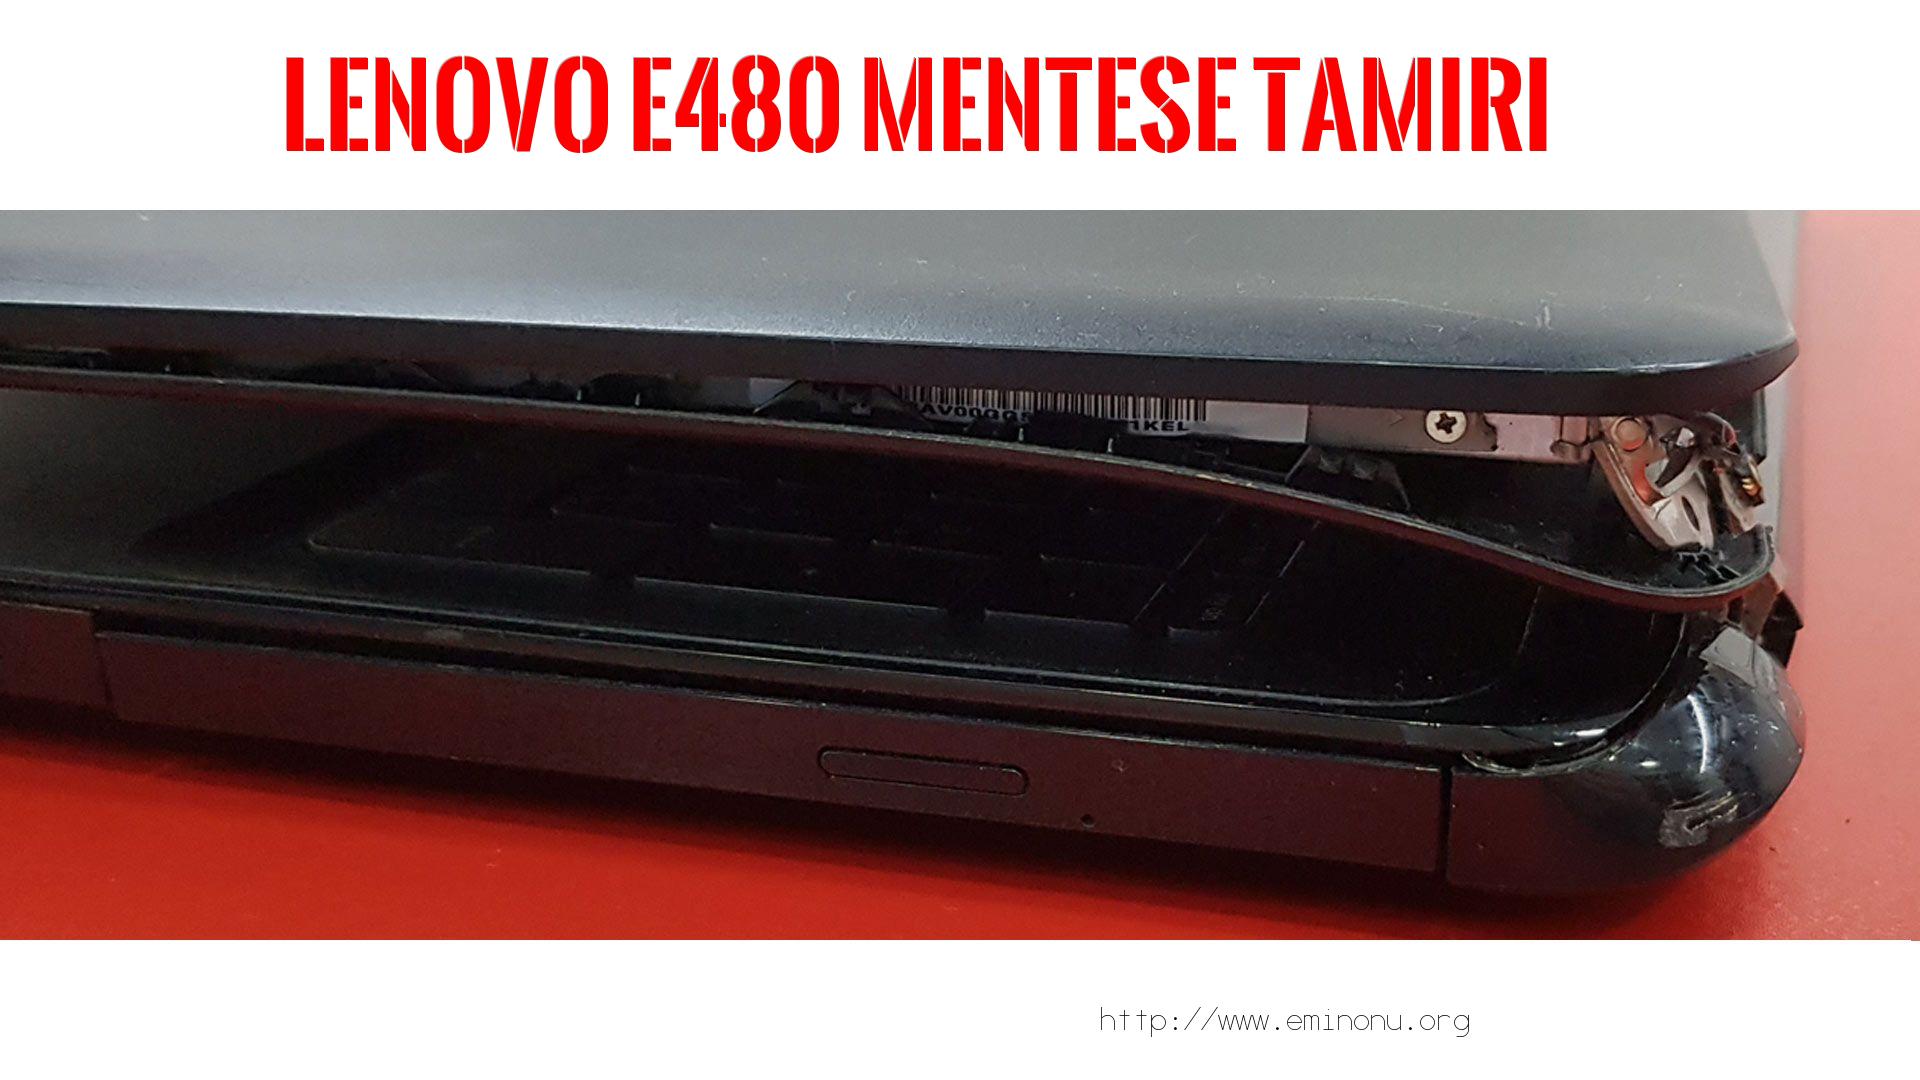 Menteşe Tamiri  Lenovo  E480  MENTEŞE TAMİRİ